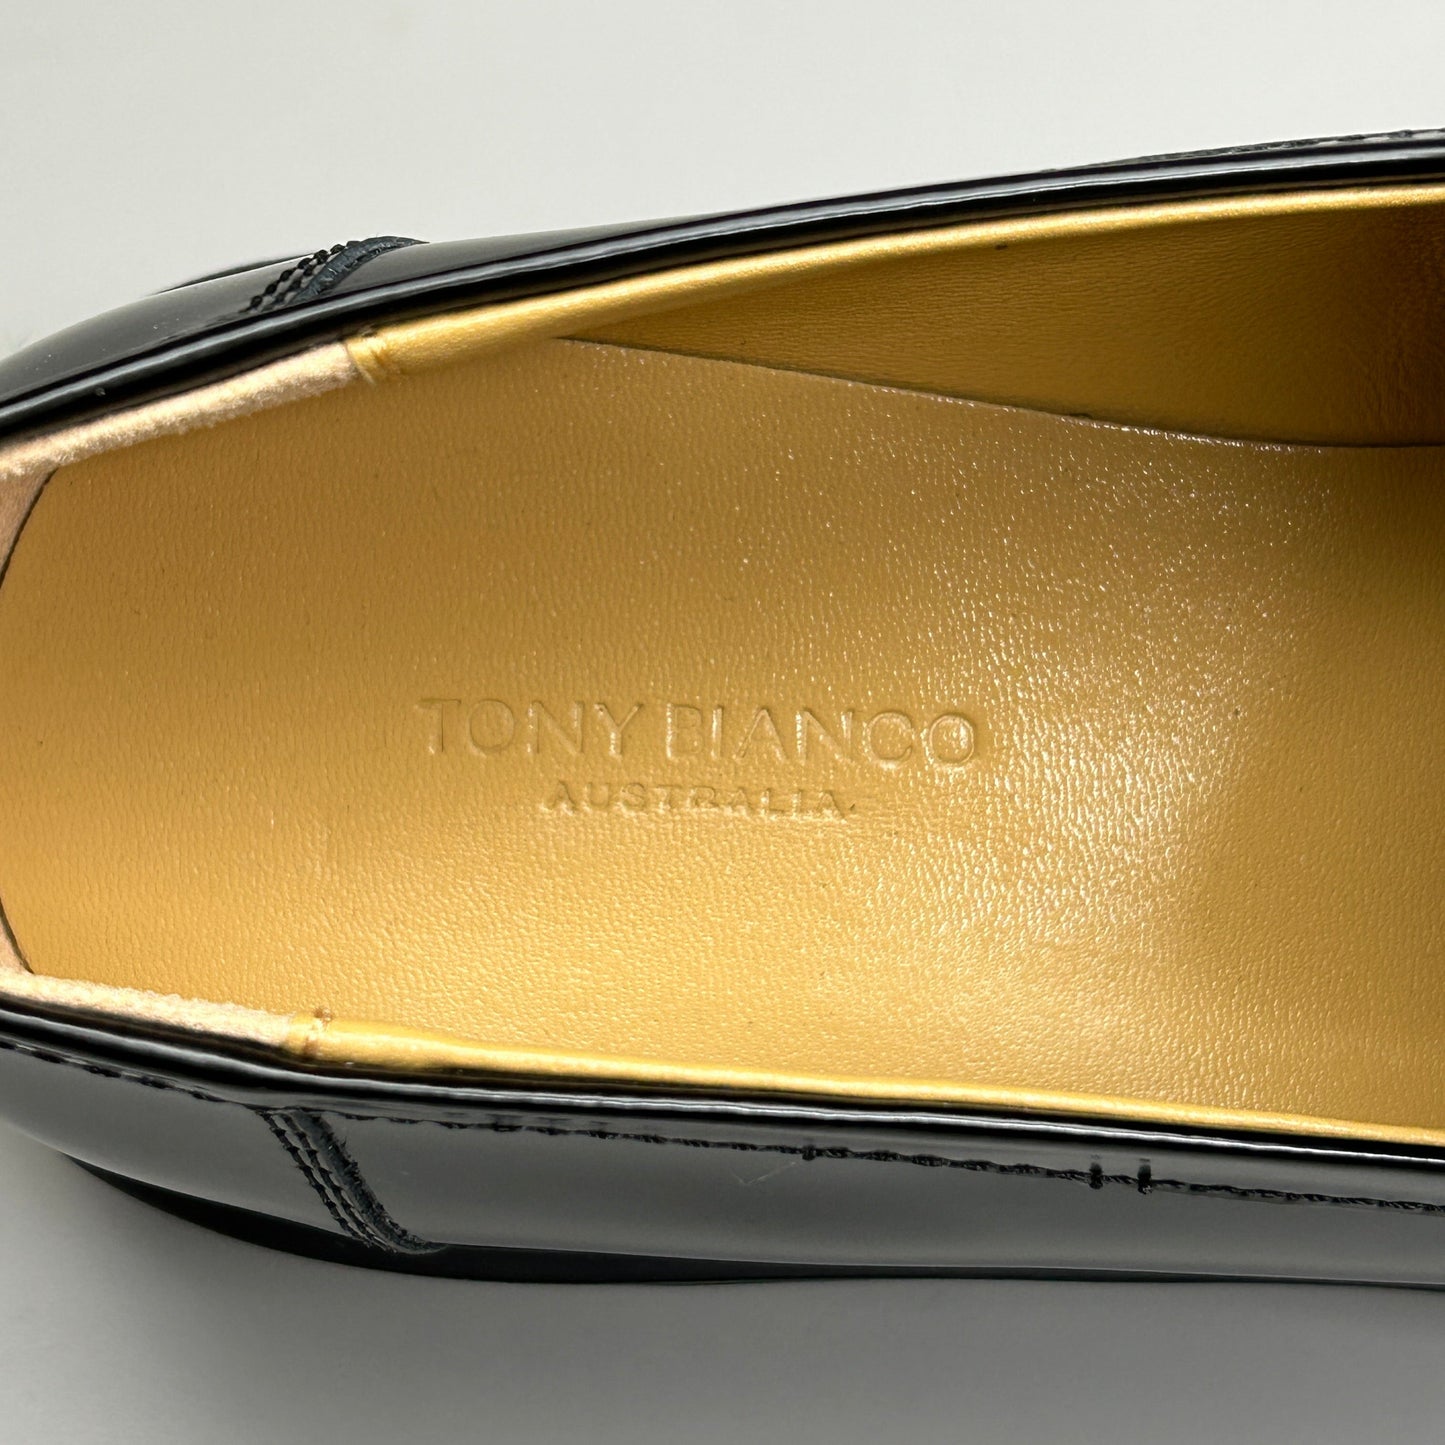 TONY BIANCO Wiz Black Hi Shine Casual Shoes Women's Sz 6 (New)